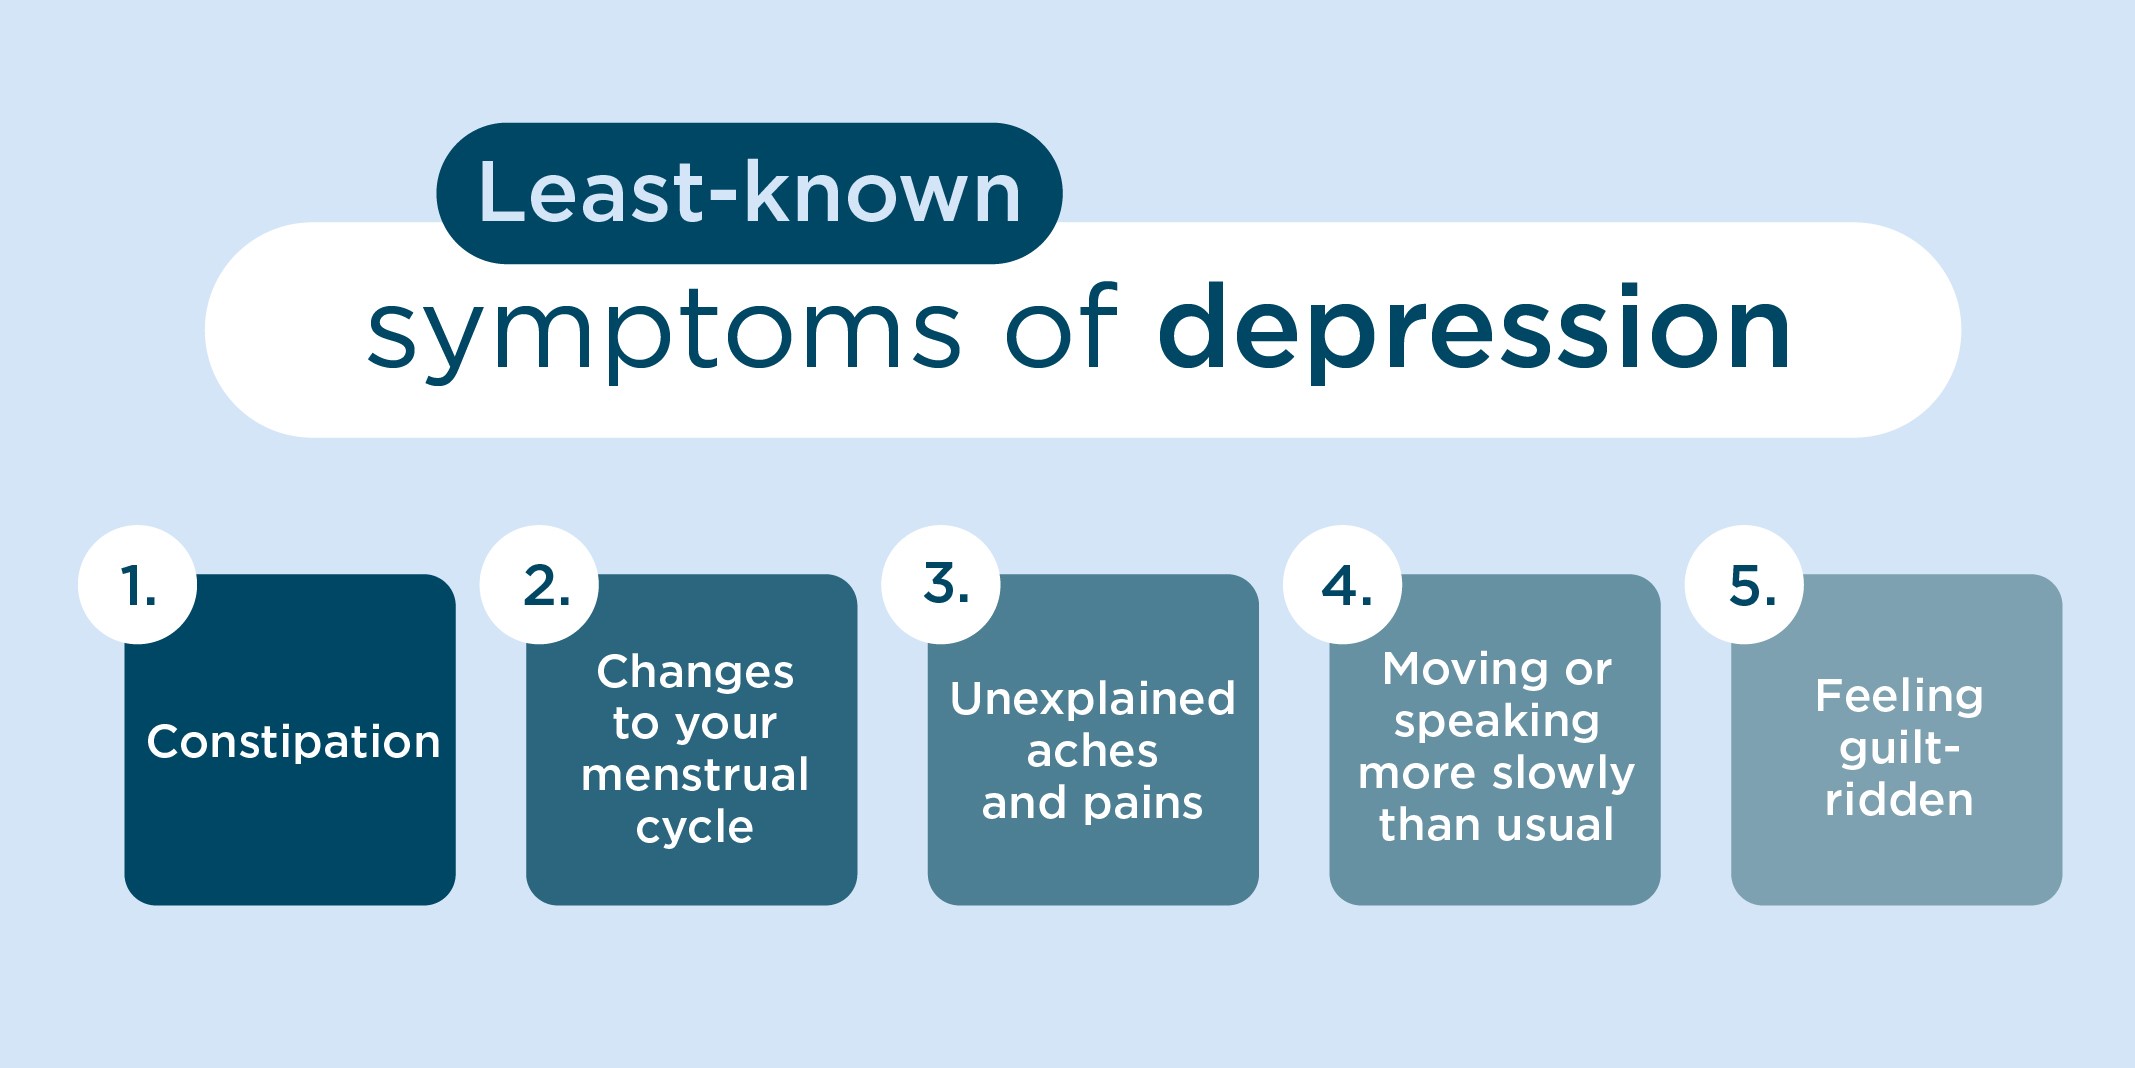 least known symptoms of depression